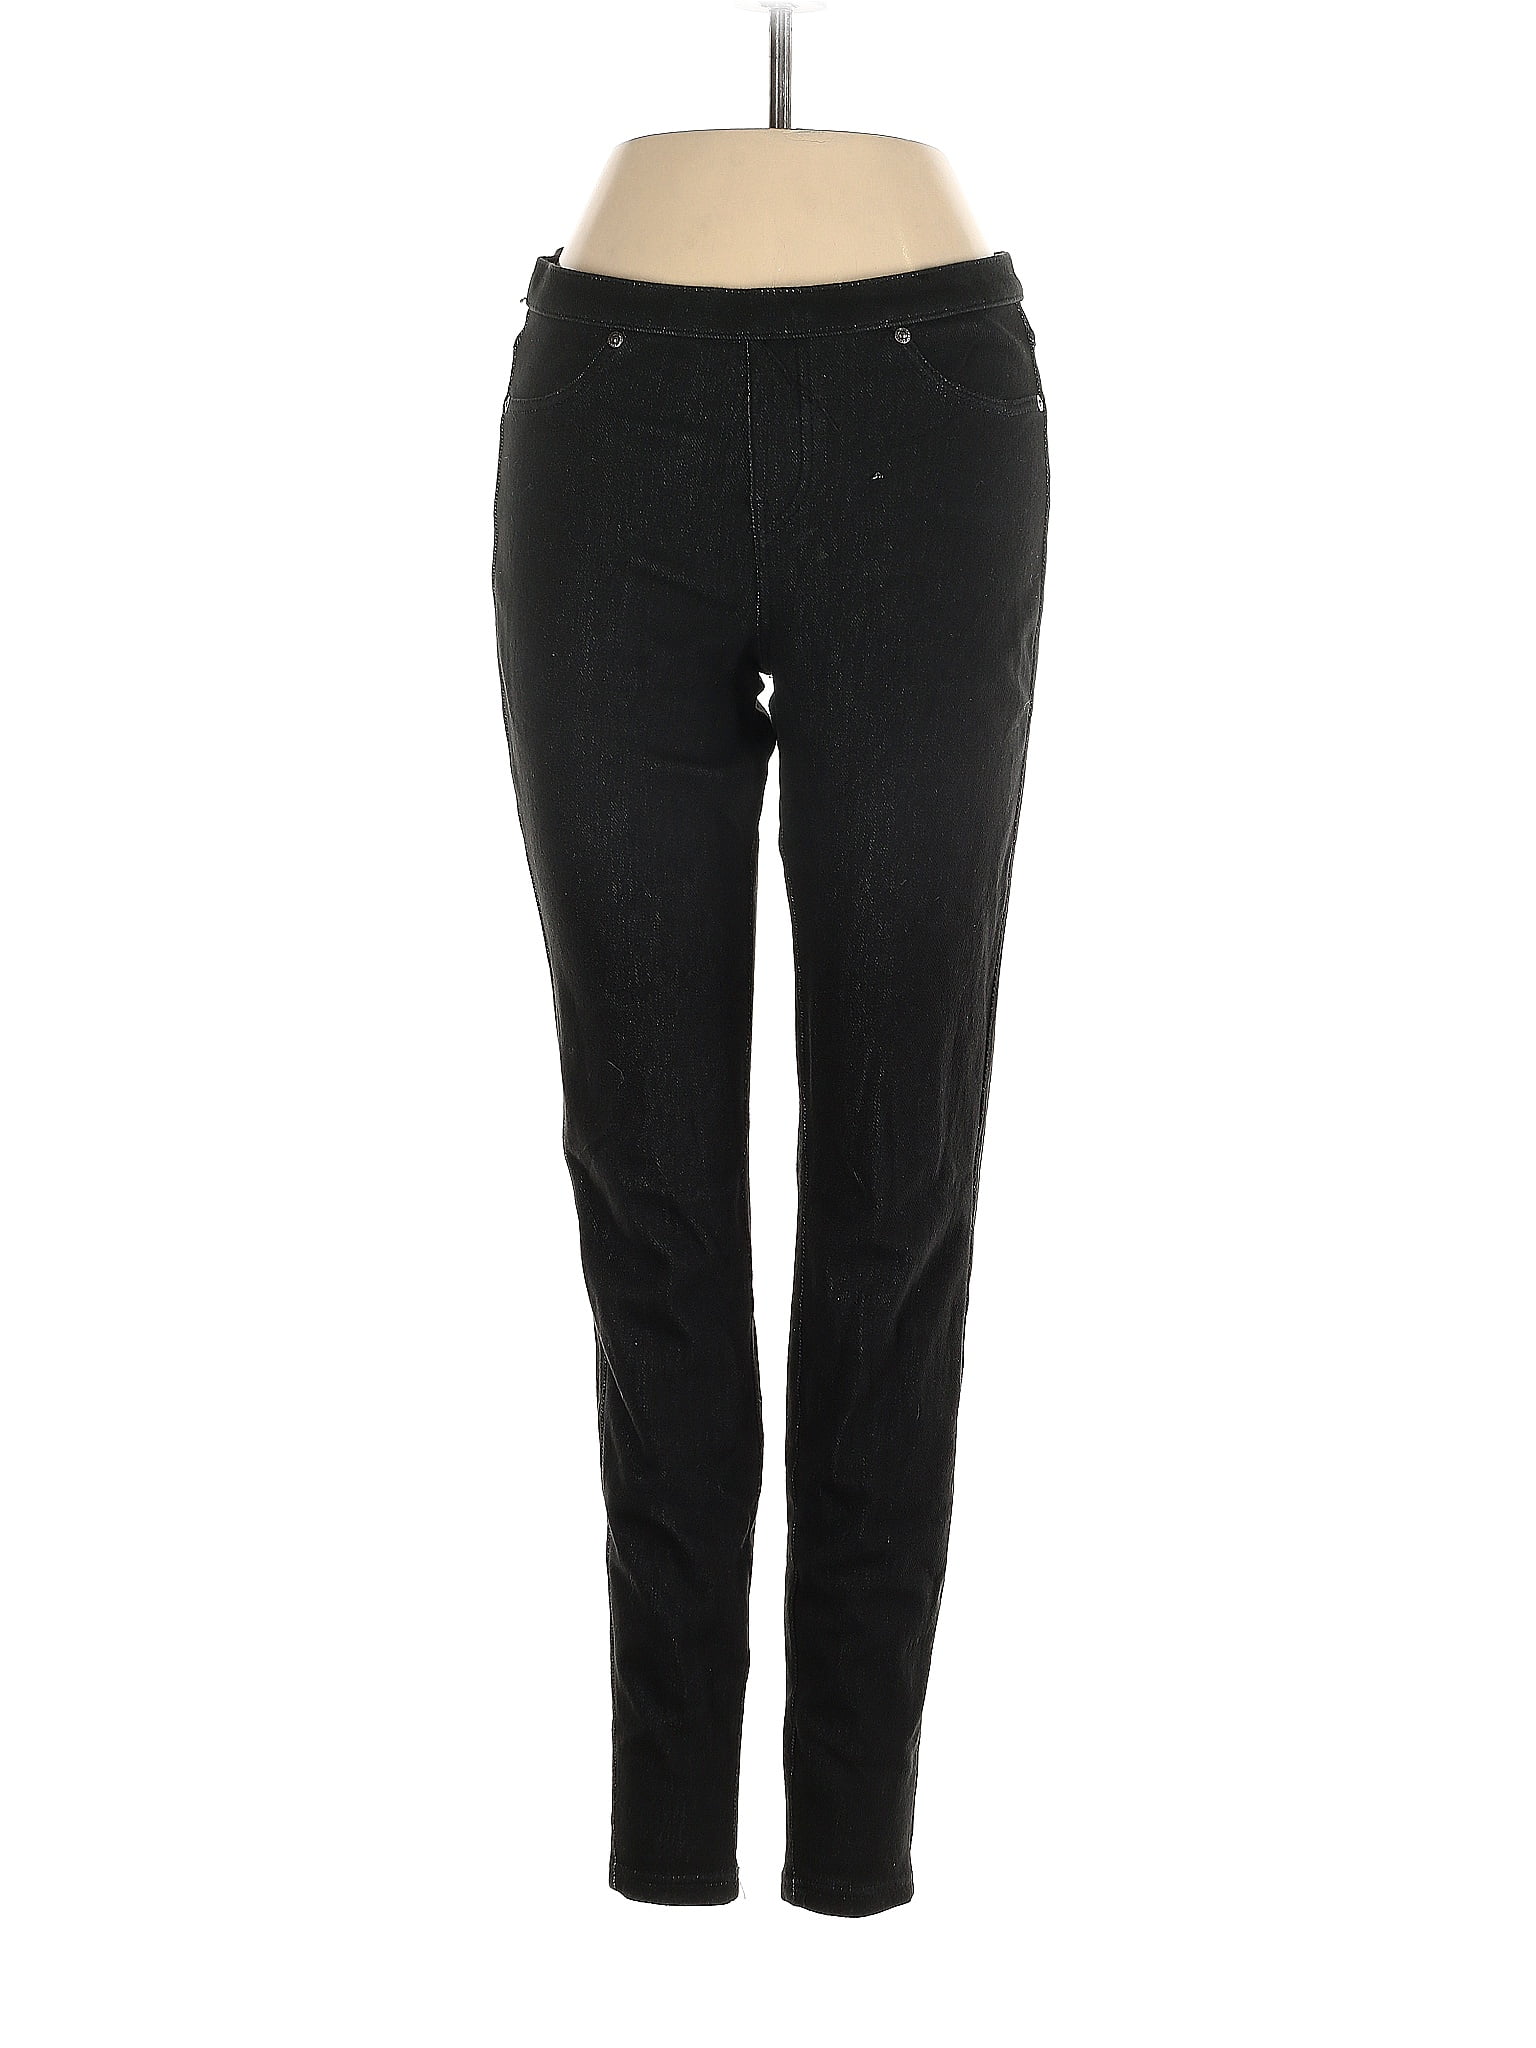 Simply Vera Vera Wang Black Jeans Size 16 - 57% off